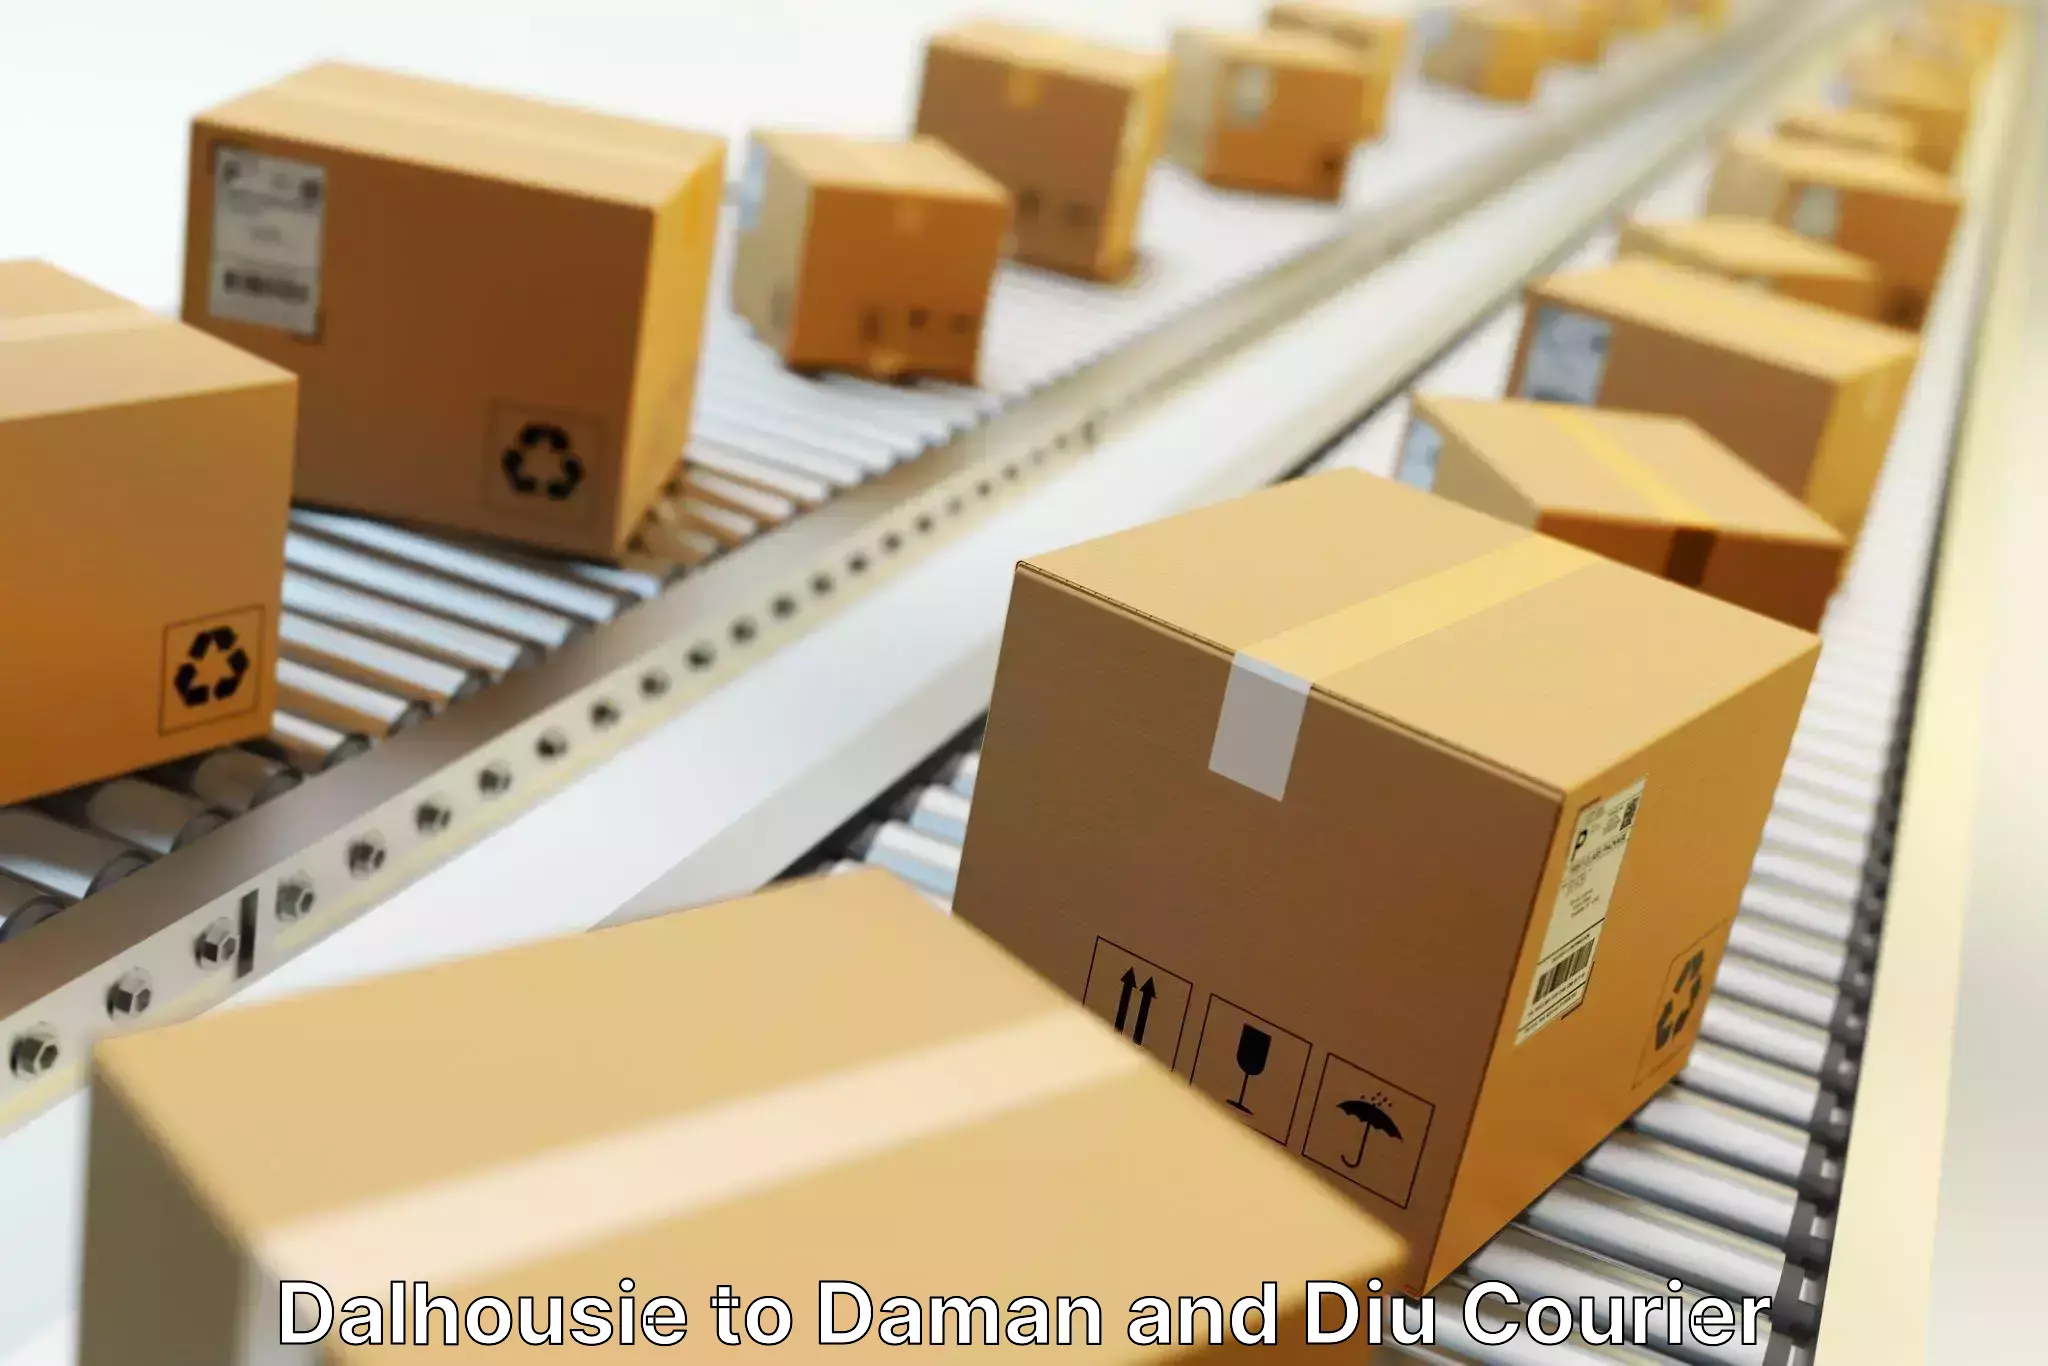 Global logistics network Dalhousie to Daman